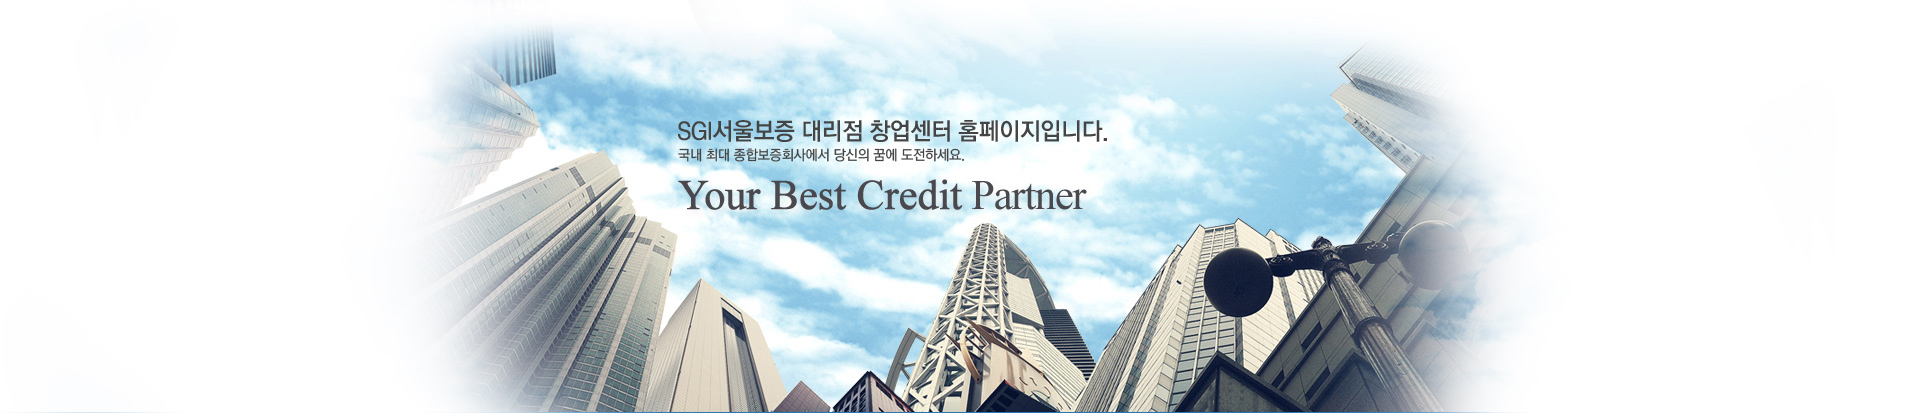 SGI서울보증 대리점 창업센터 홈페이지입니다.국내 최대 종합보증회사에서 당신의 꿈에 도전하세요.Your Best Credit Partner